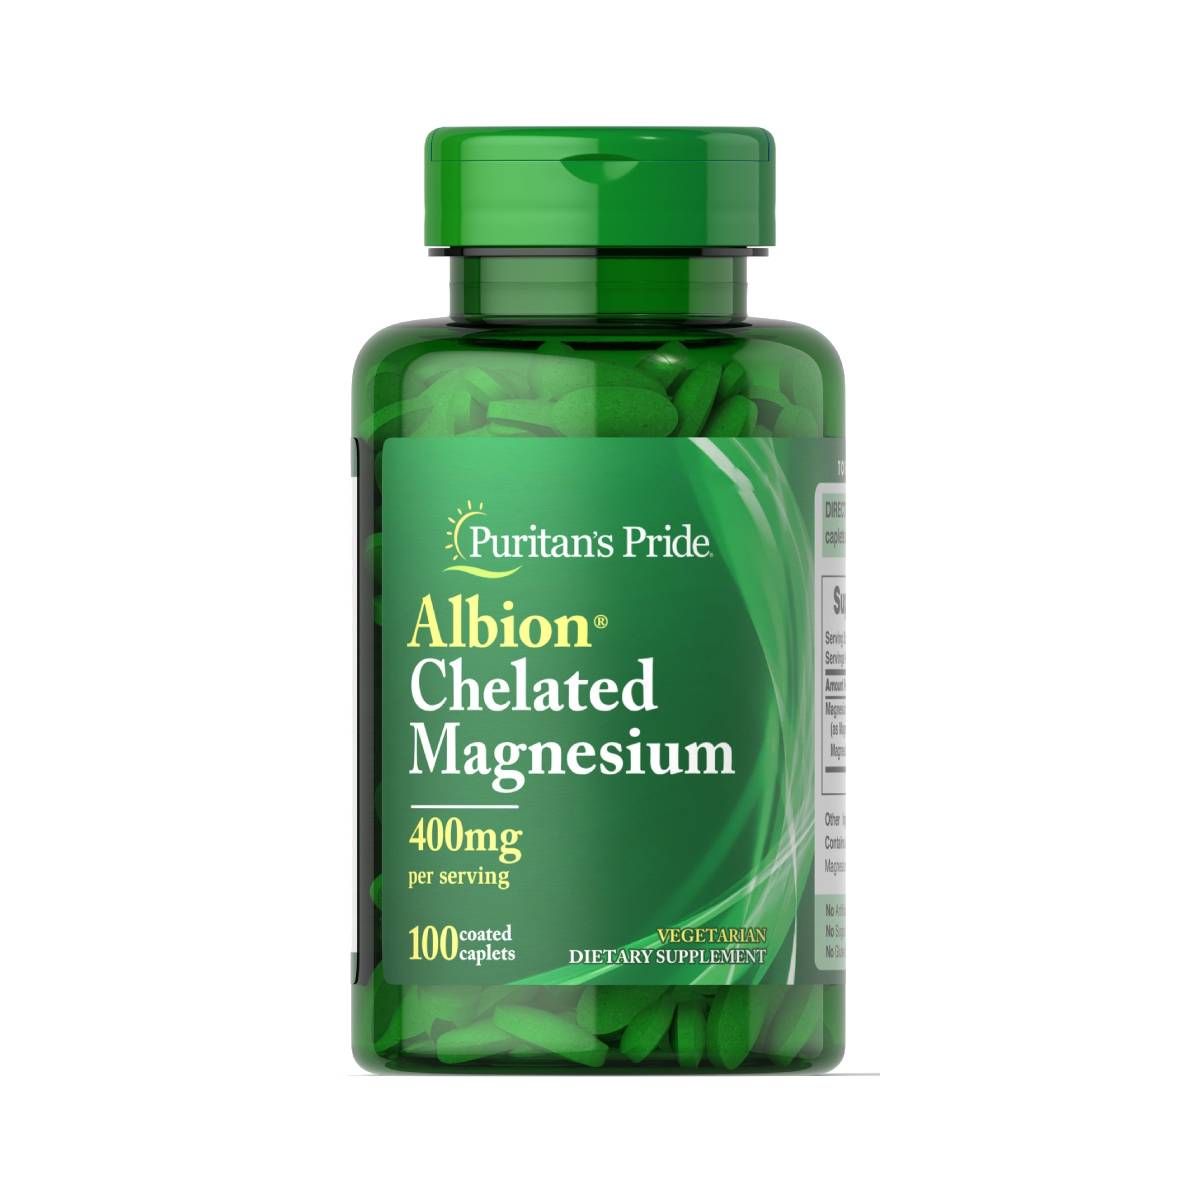 Puritan's Pride, Albion Chelated Magnesium 400 mg